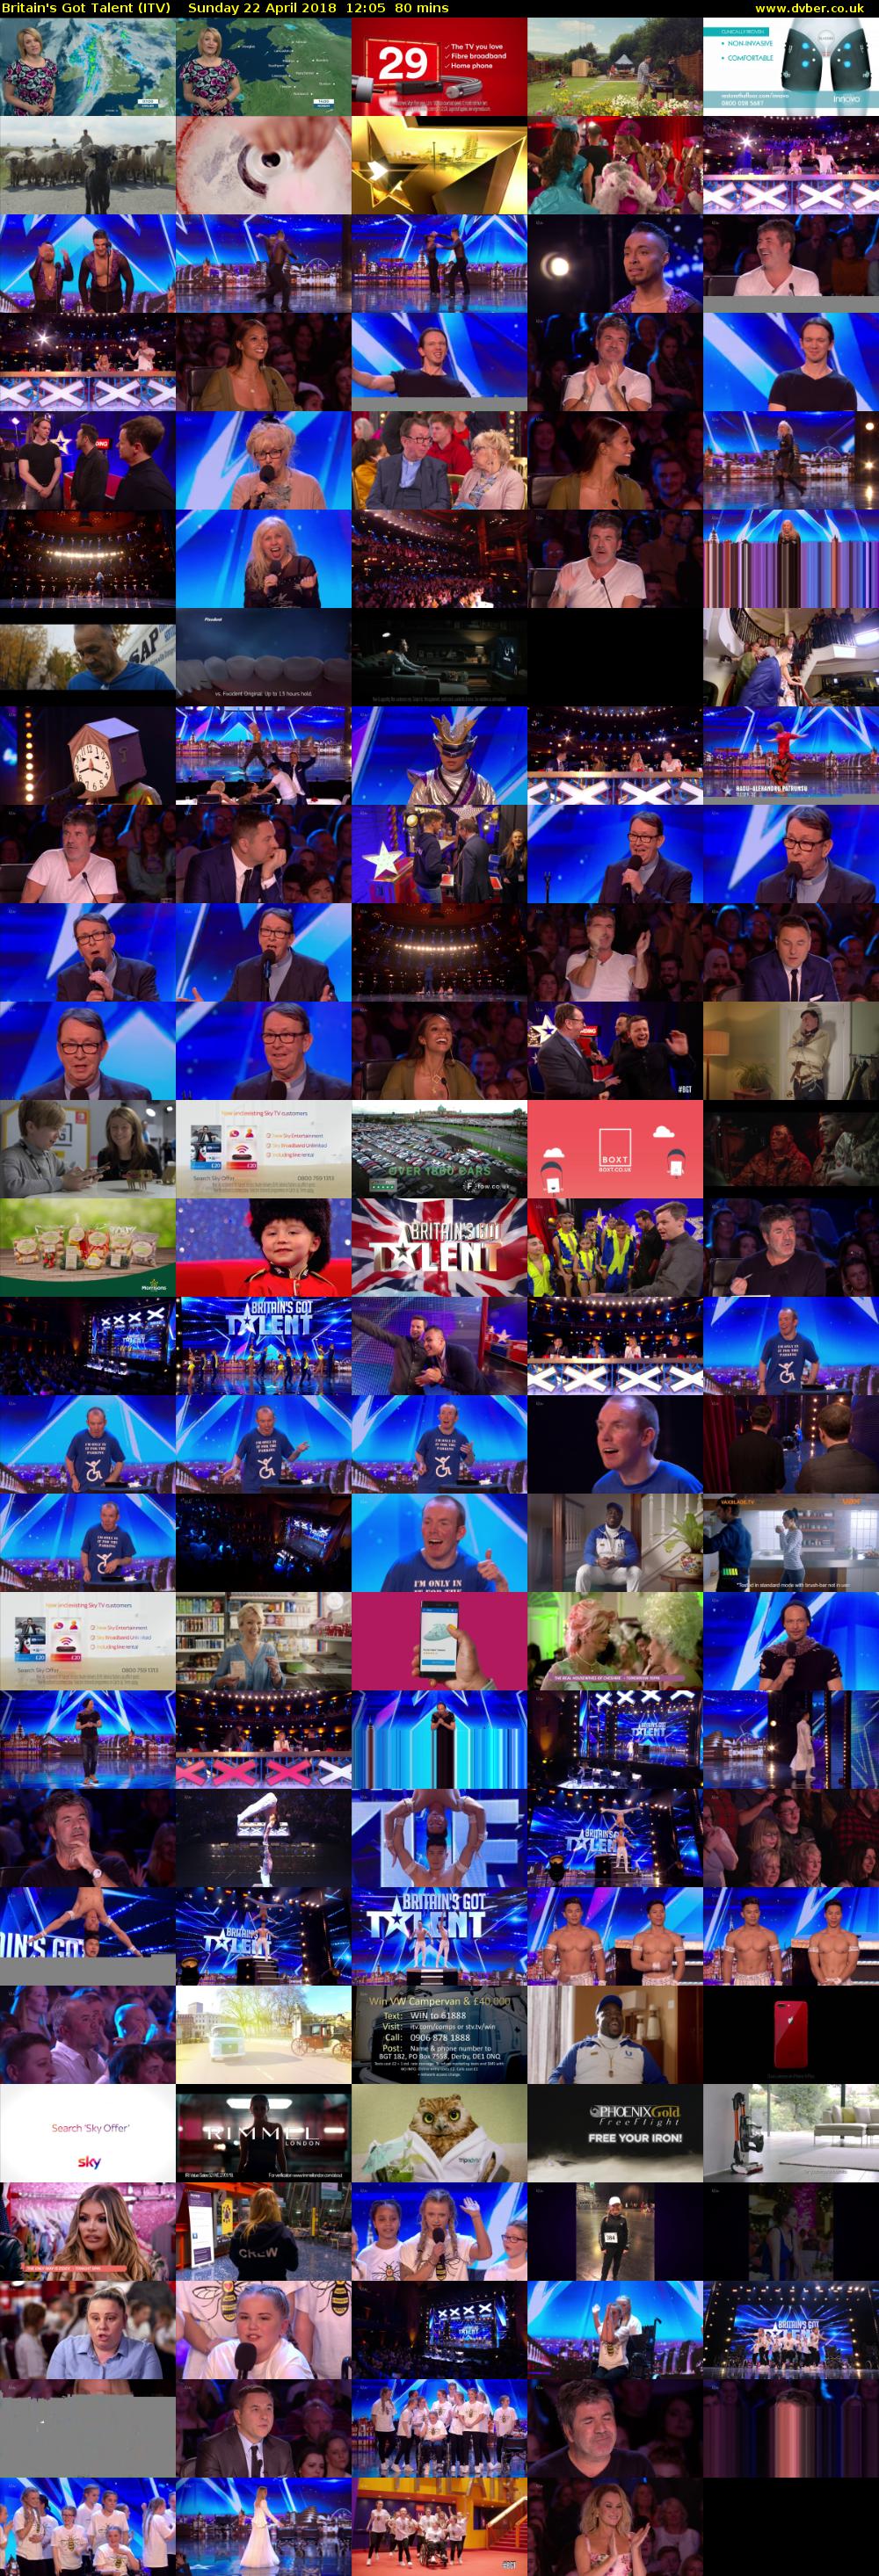 Britain's Got Talent (ITV) Sunday 22 April 2018 12:05 - 13:25